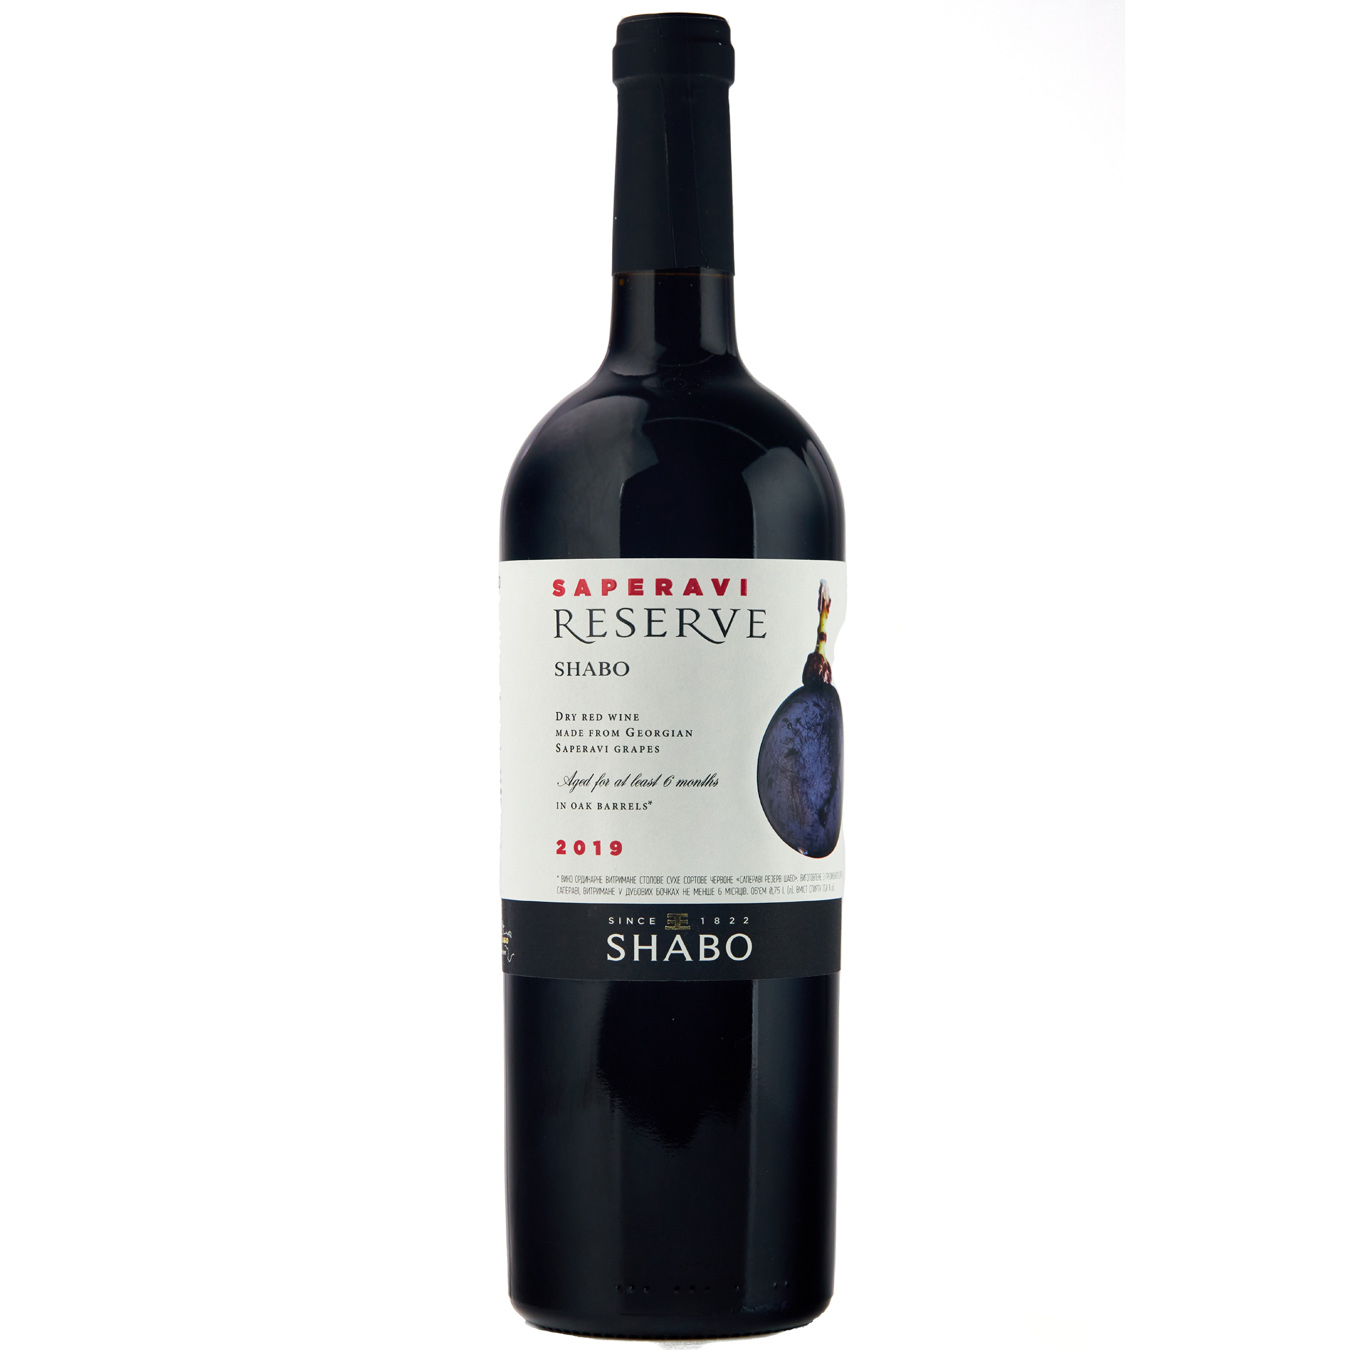 Shabo Reserve wine Saperava 13% 0.75 l